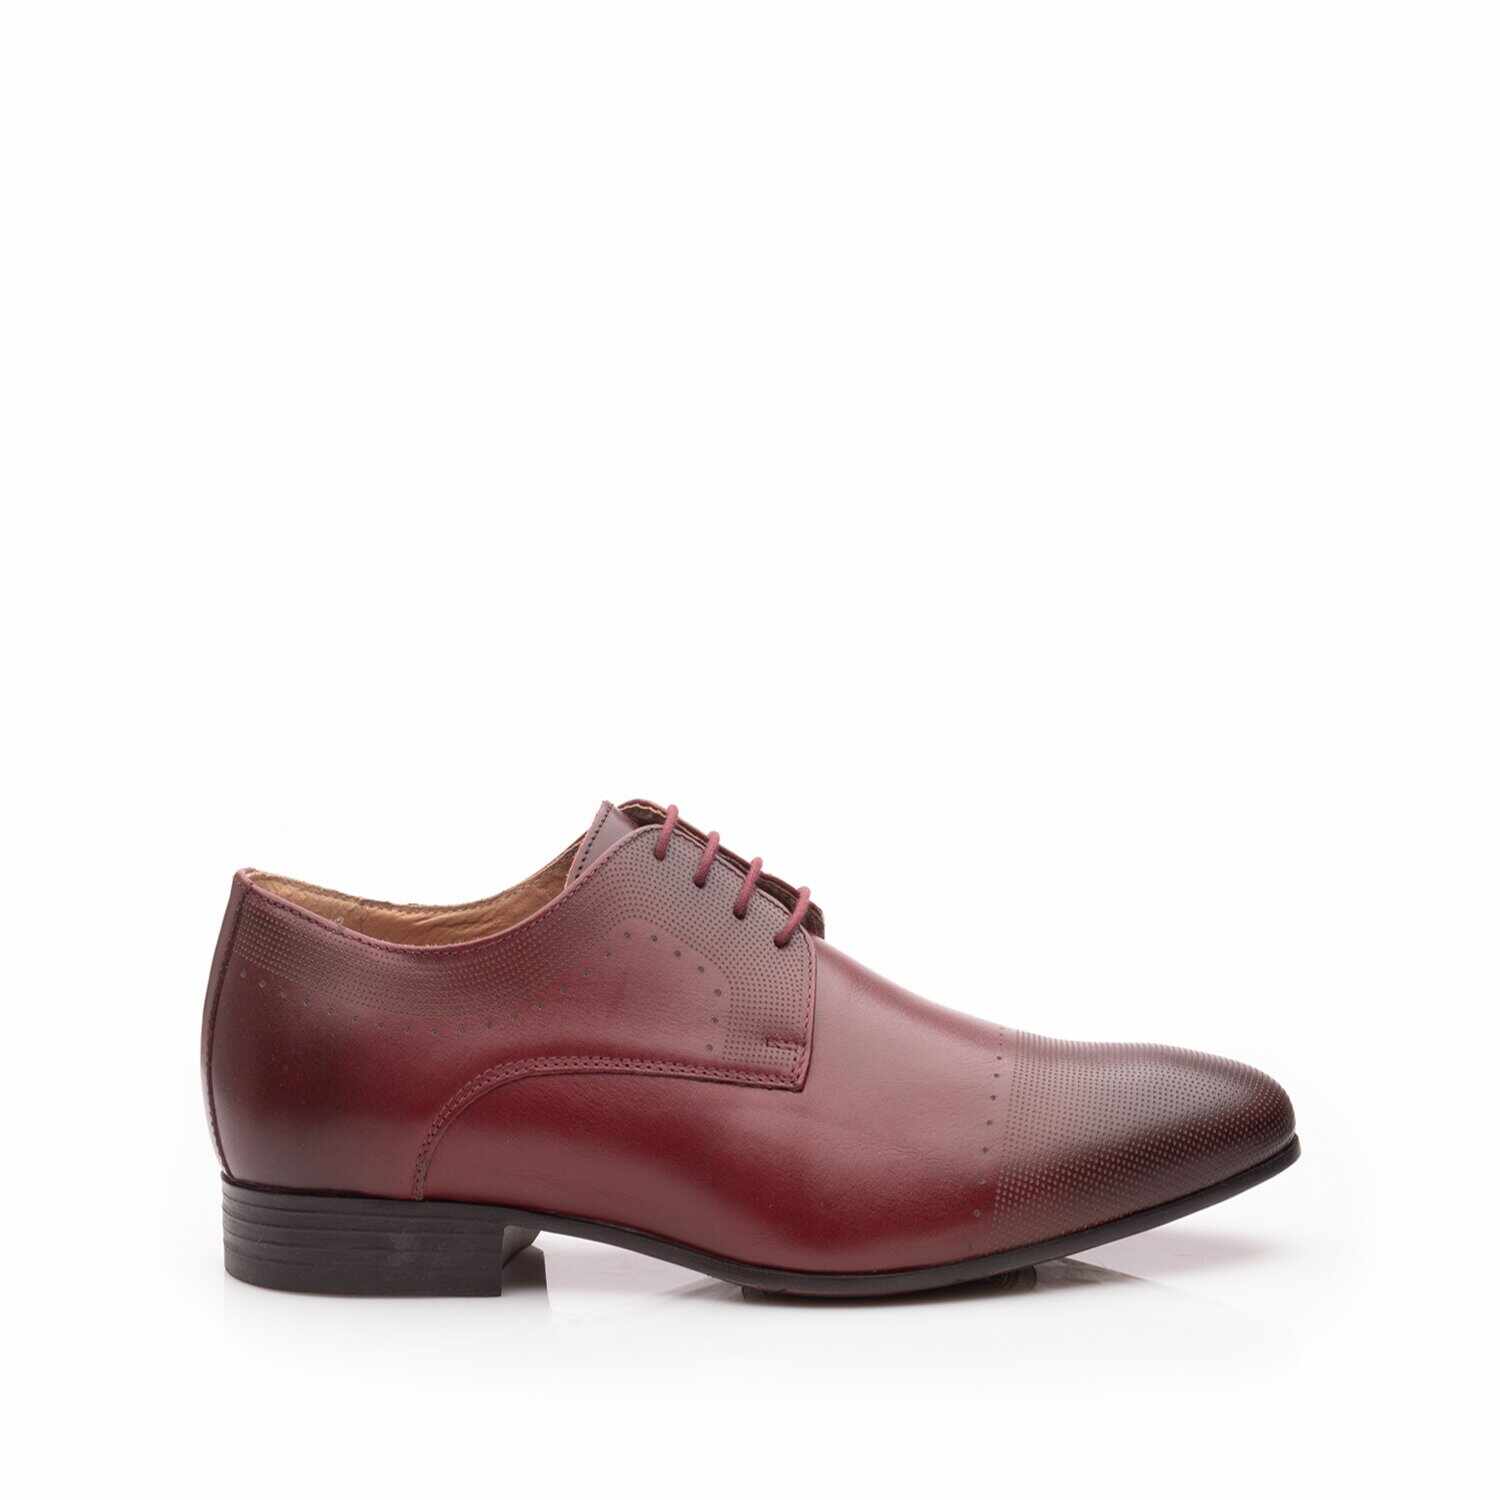 Pantofi eleganti barbati din piele naturala,Leofex - 885 Visiniu Box